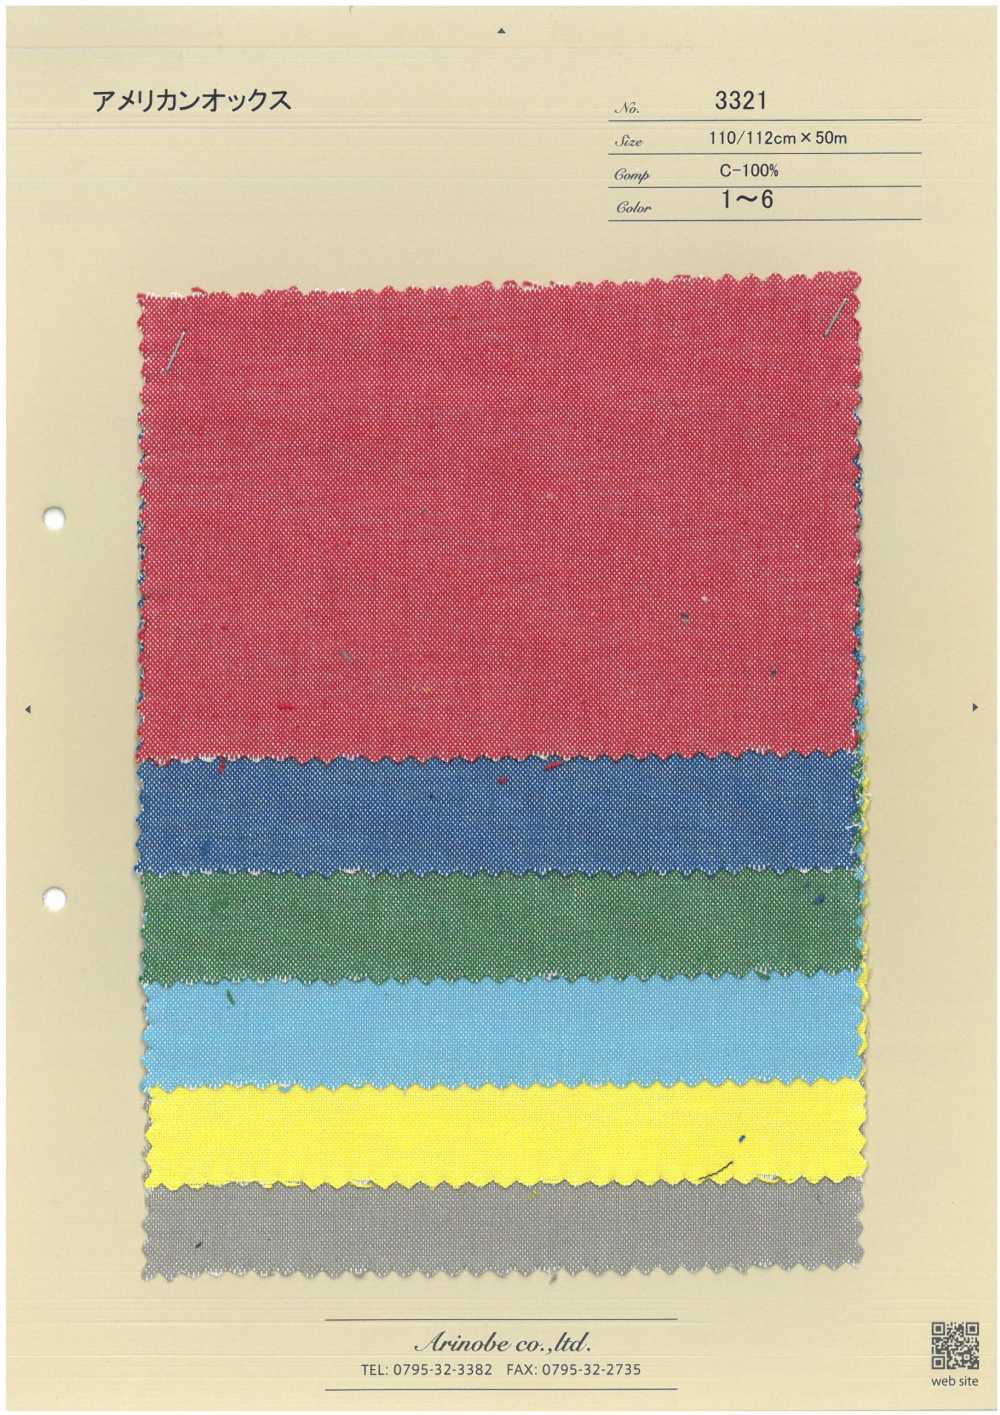 3321 Oxford Américain[Fabrication De Textile] ARINOBE CO., LTD.